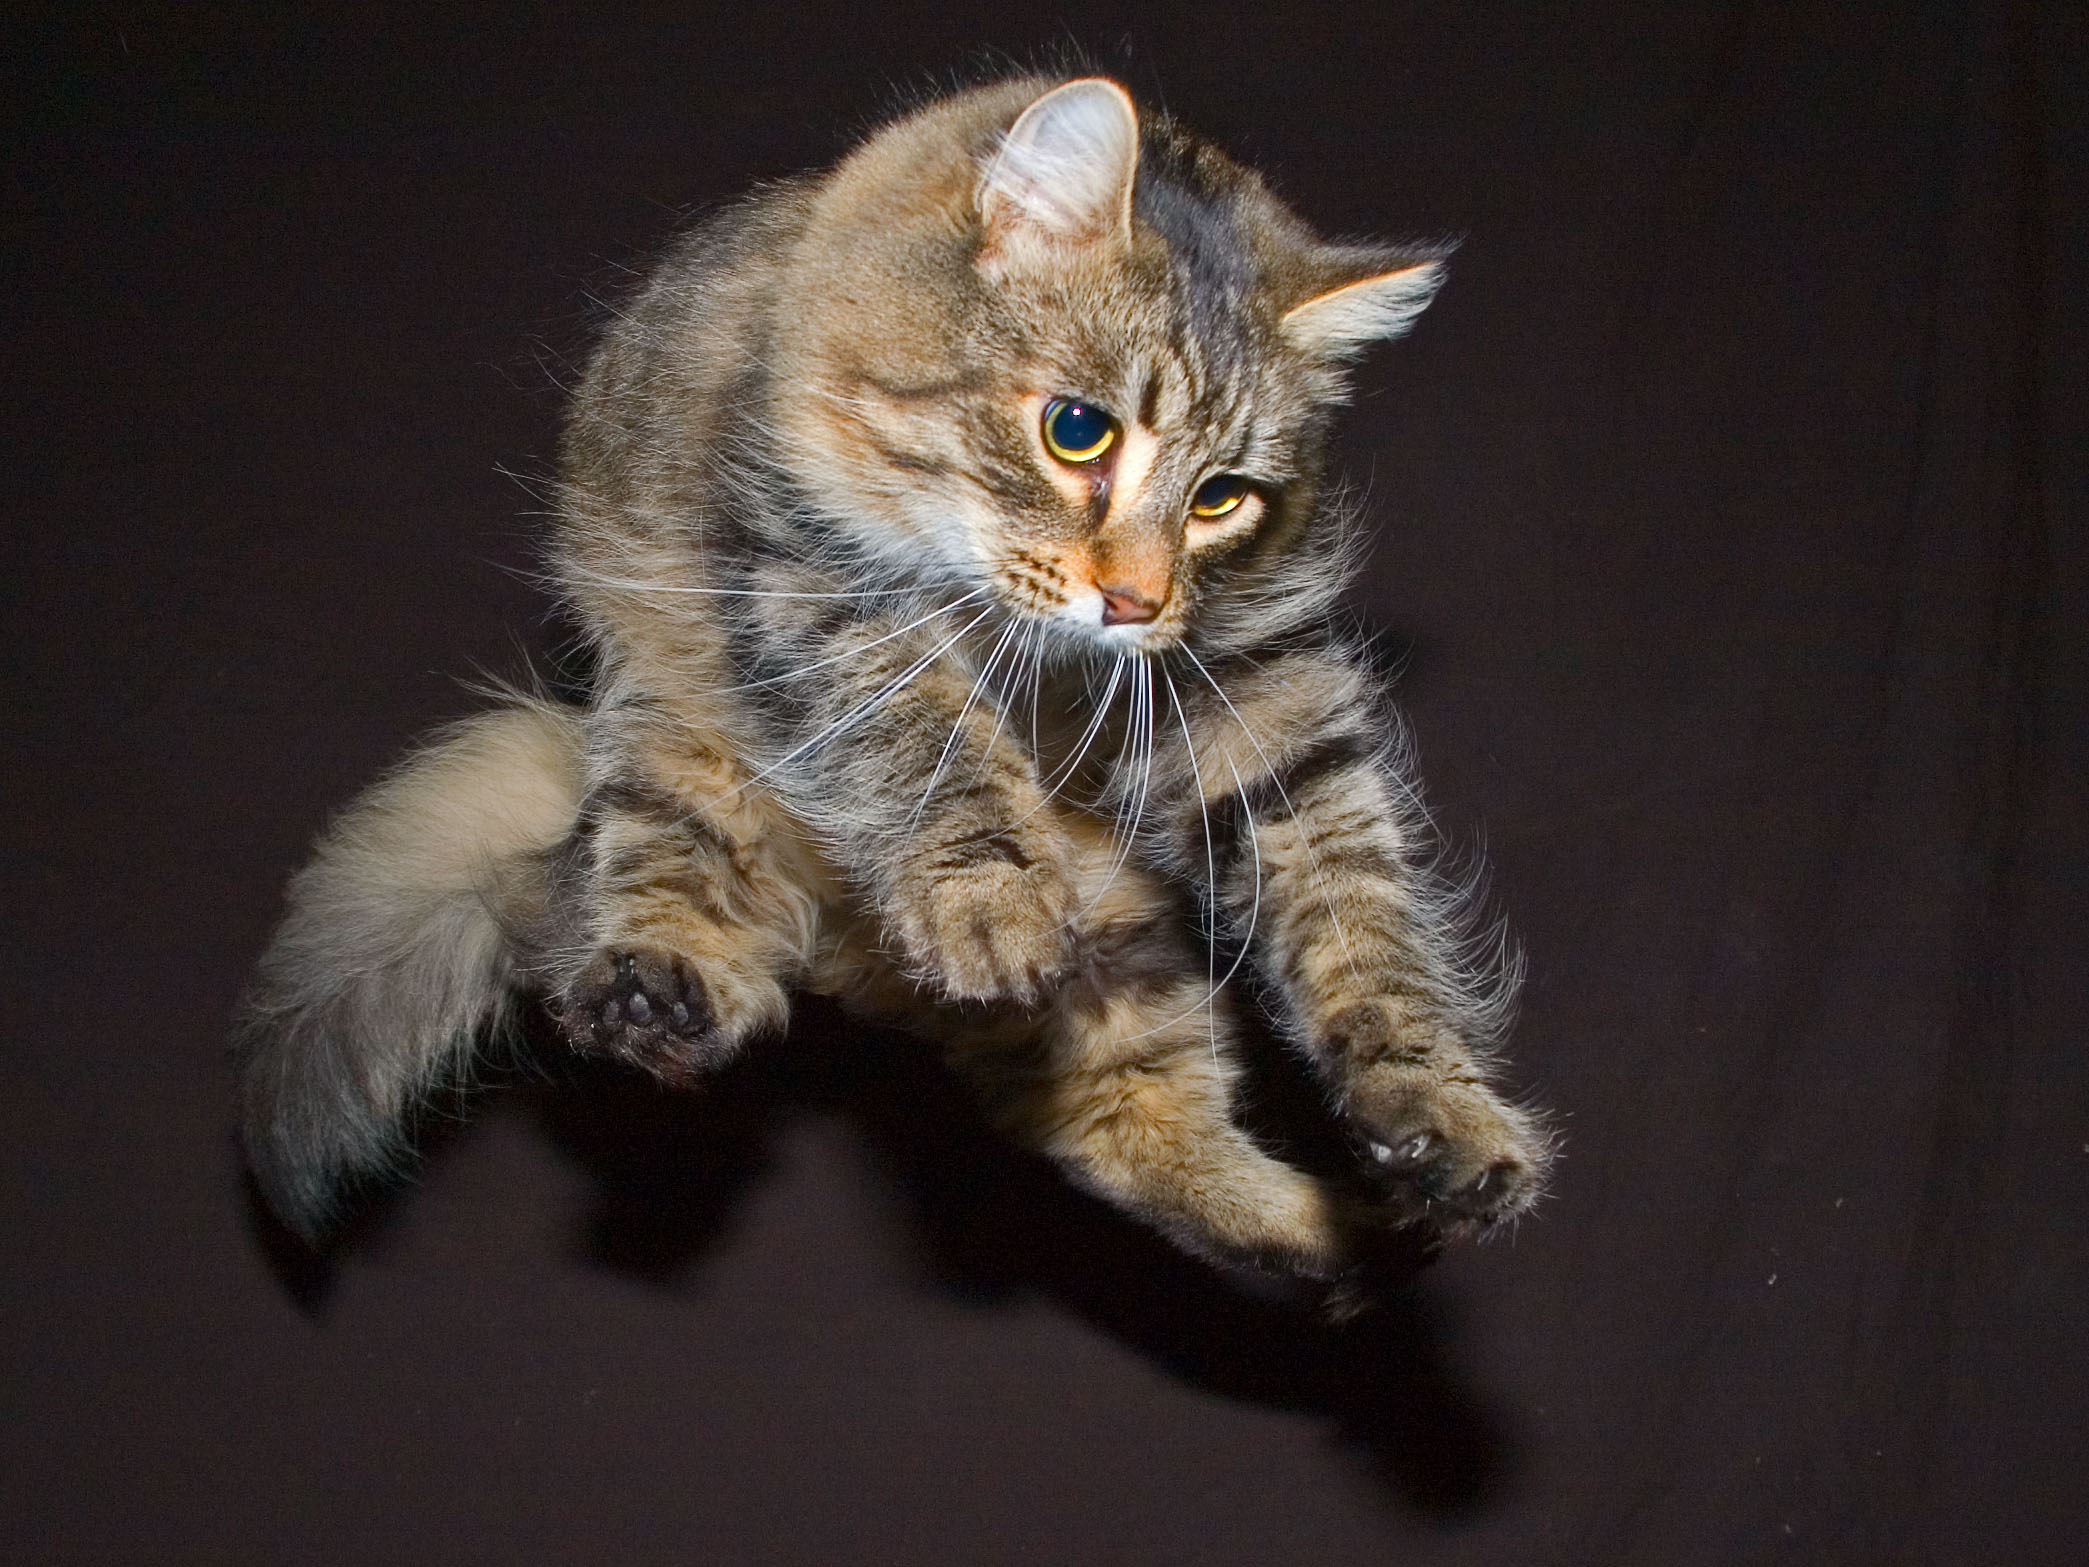 cats, animals, jumping - desktop wallpaper